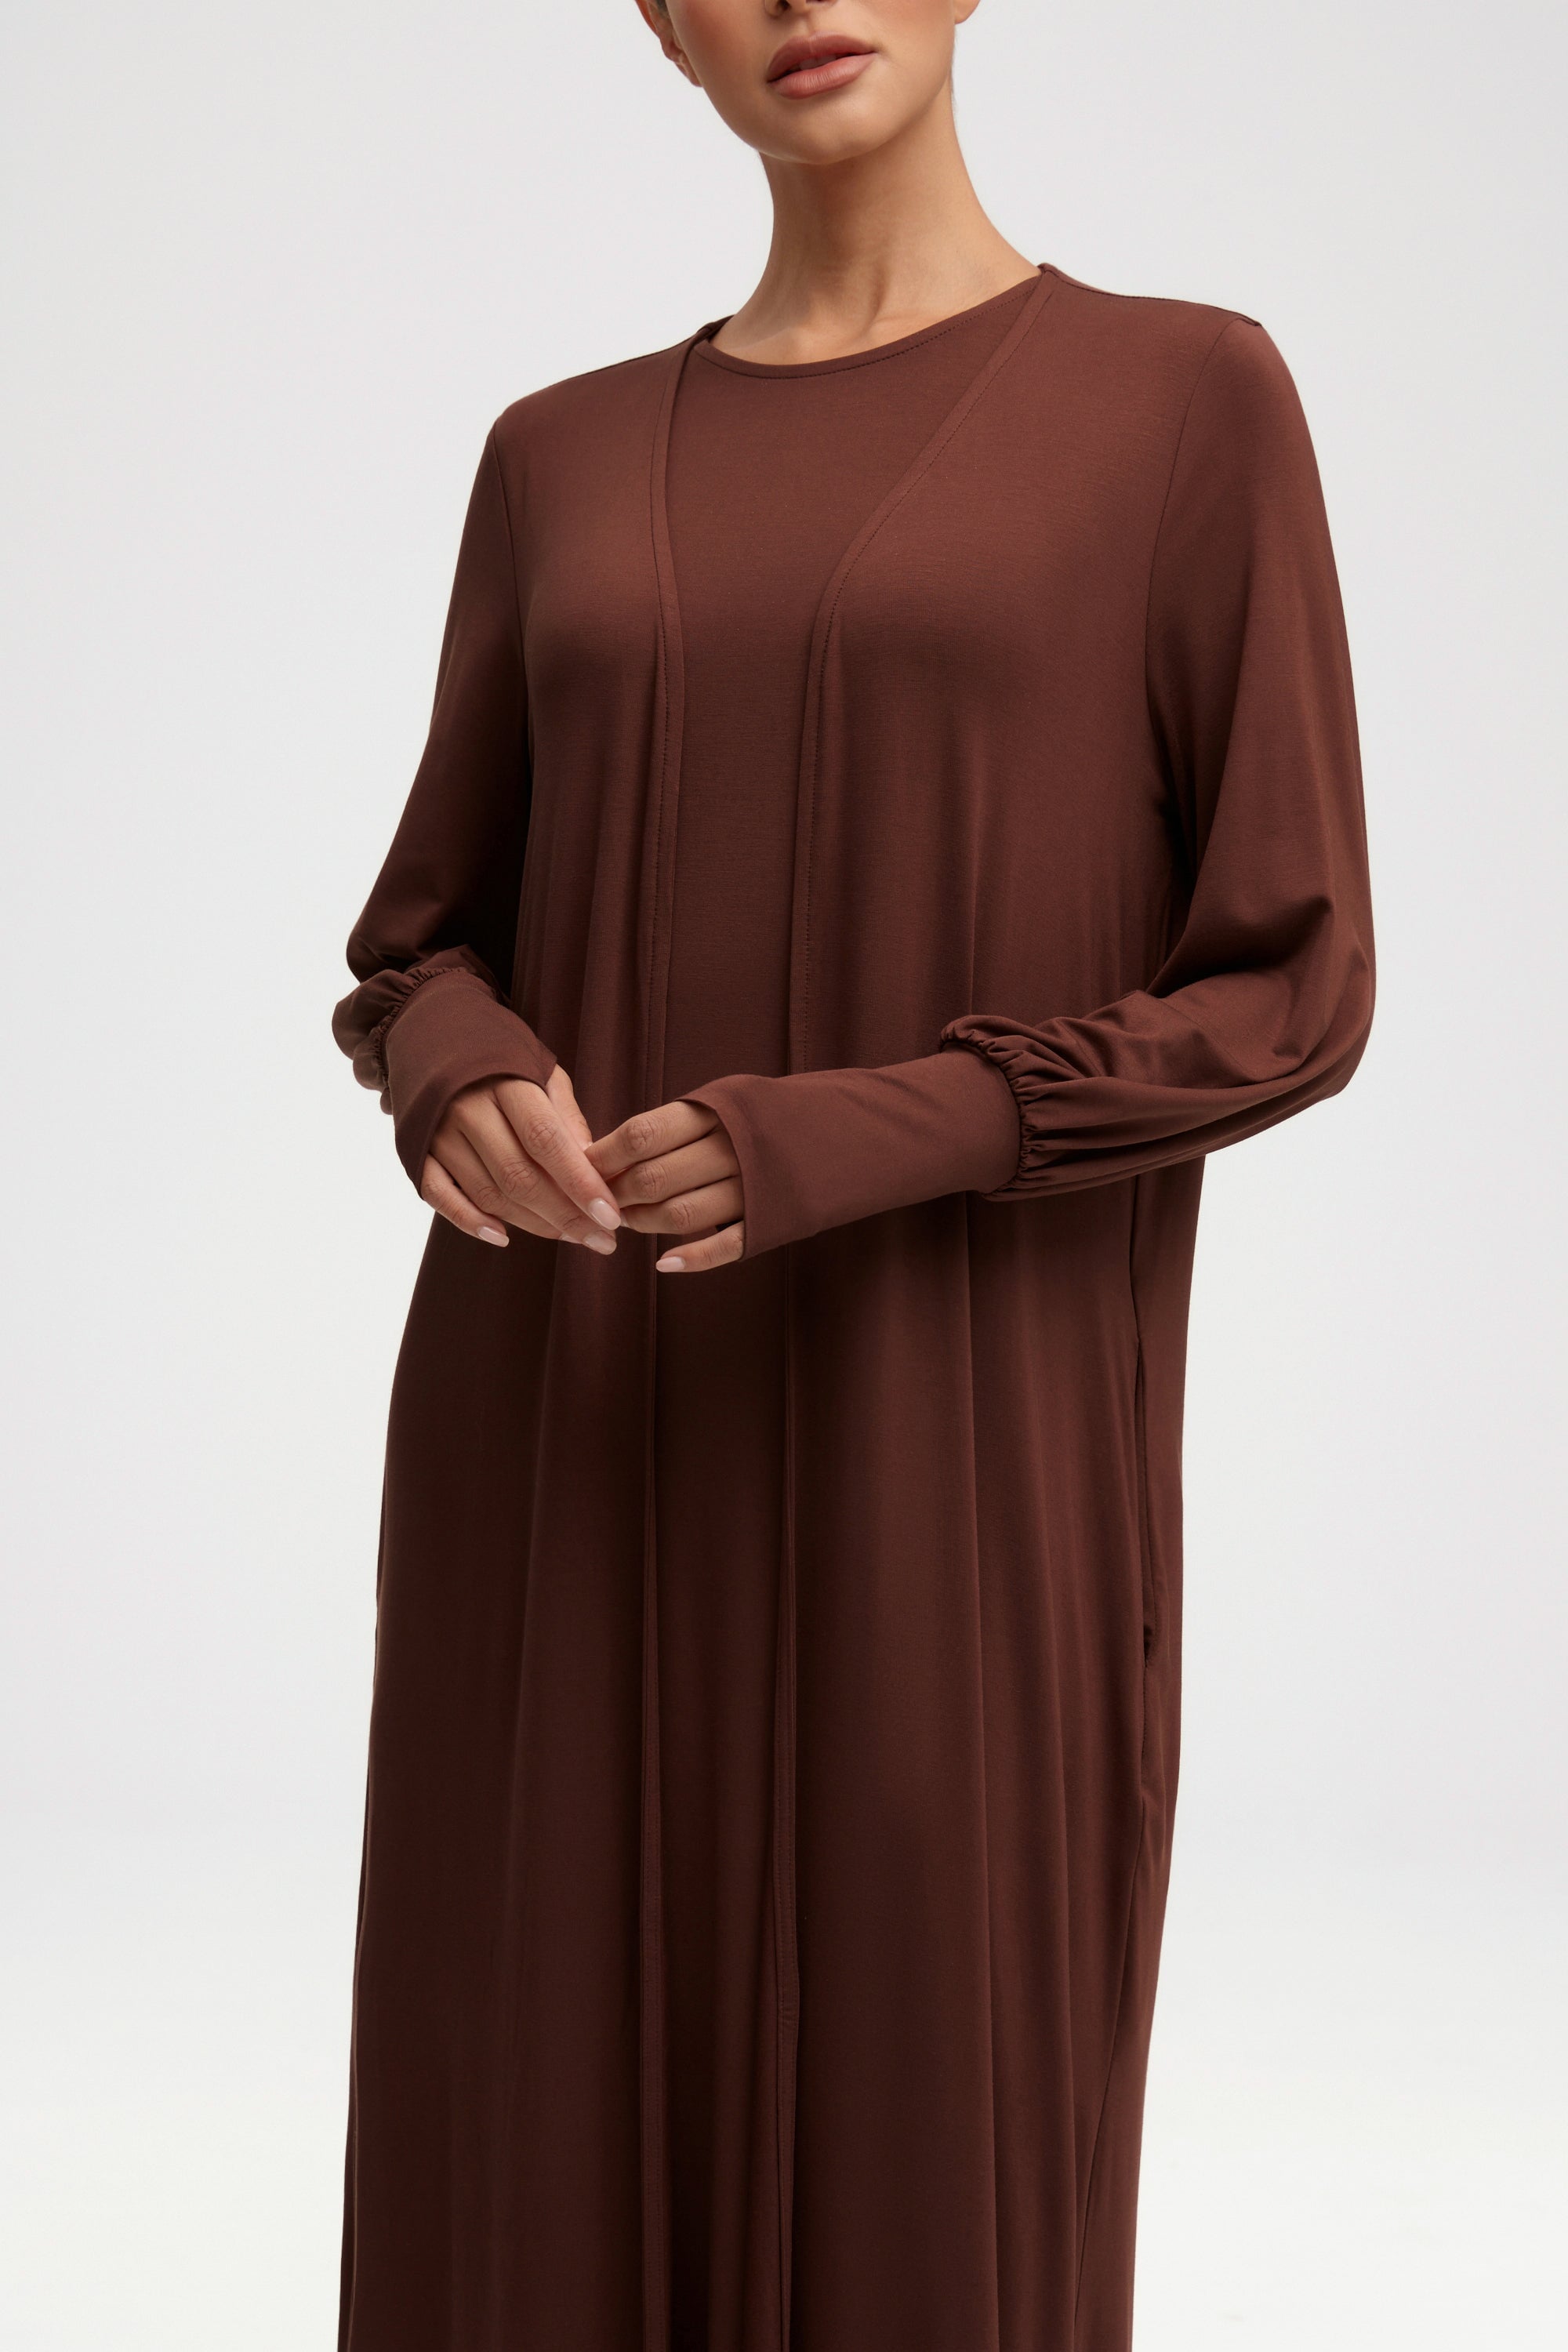 Jenin Jersey Open Abaya & Maxi Dress Set - Chocolate Clothing epschoolboard 